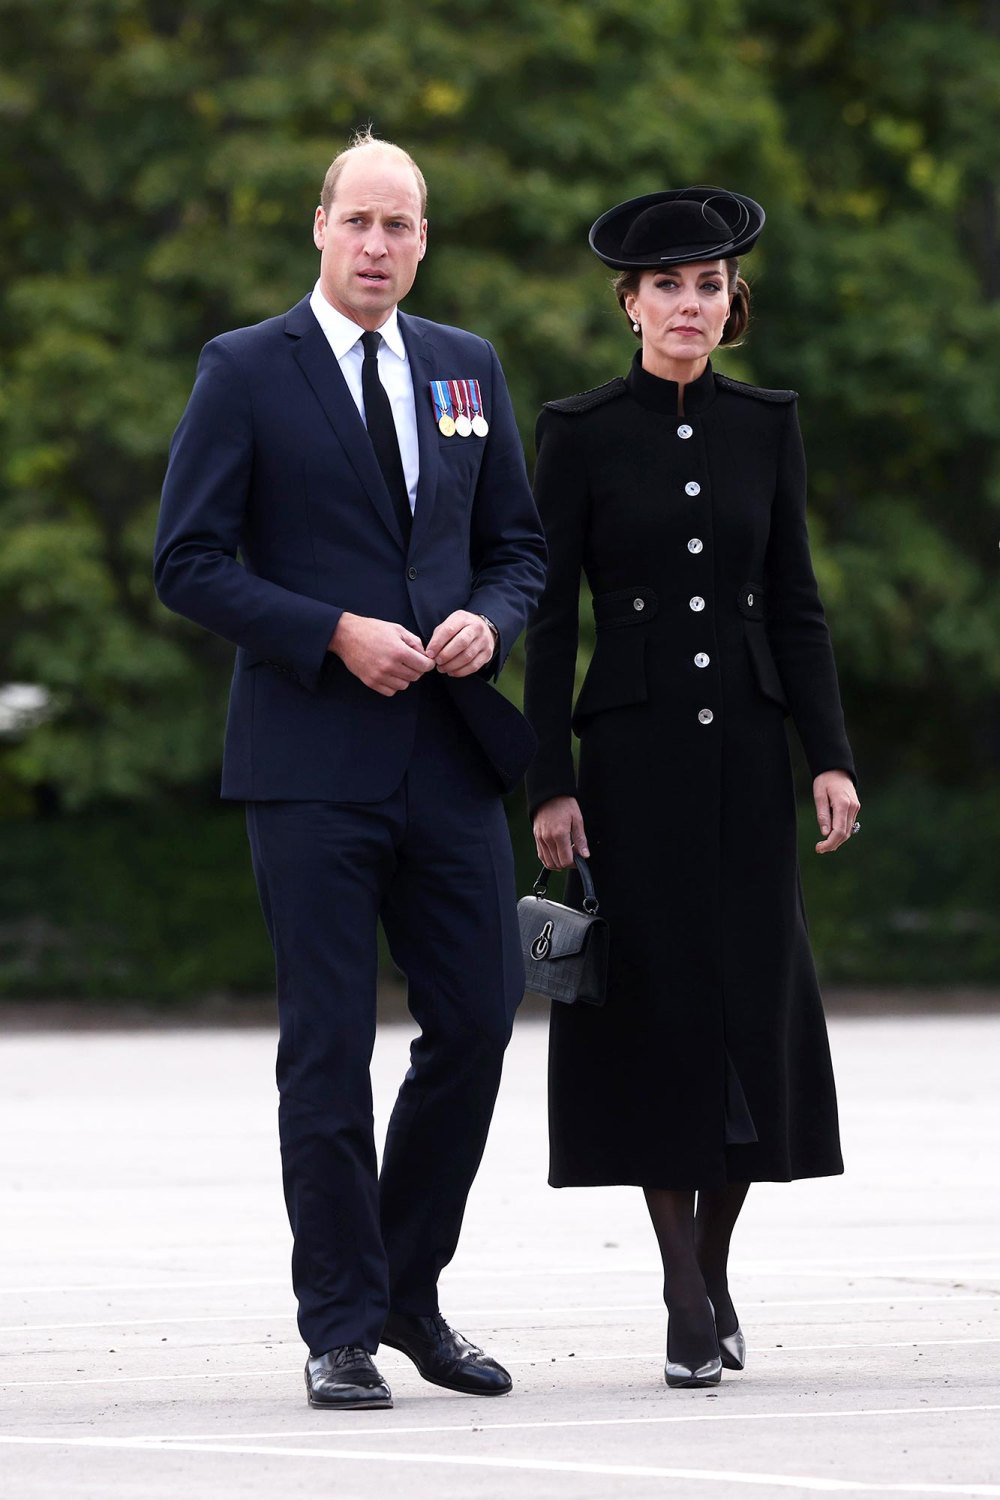 Sarah Rose Hanbury Reportedly Shut Down Prince William Affair Rumors Amid Kate Middleton Controversy